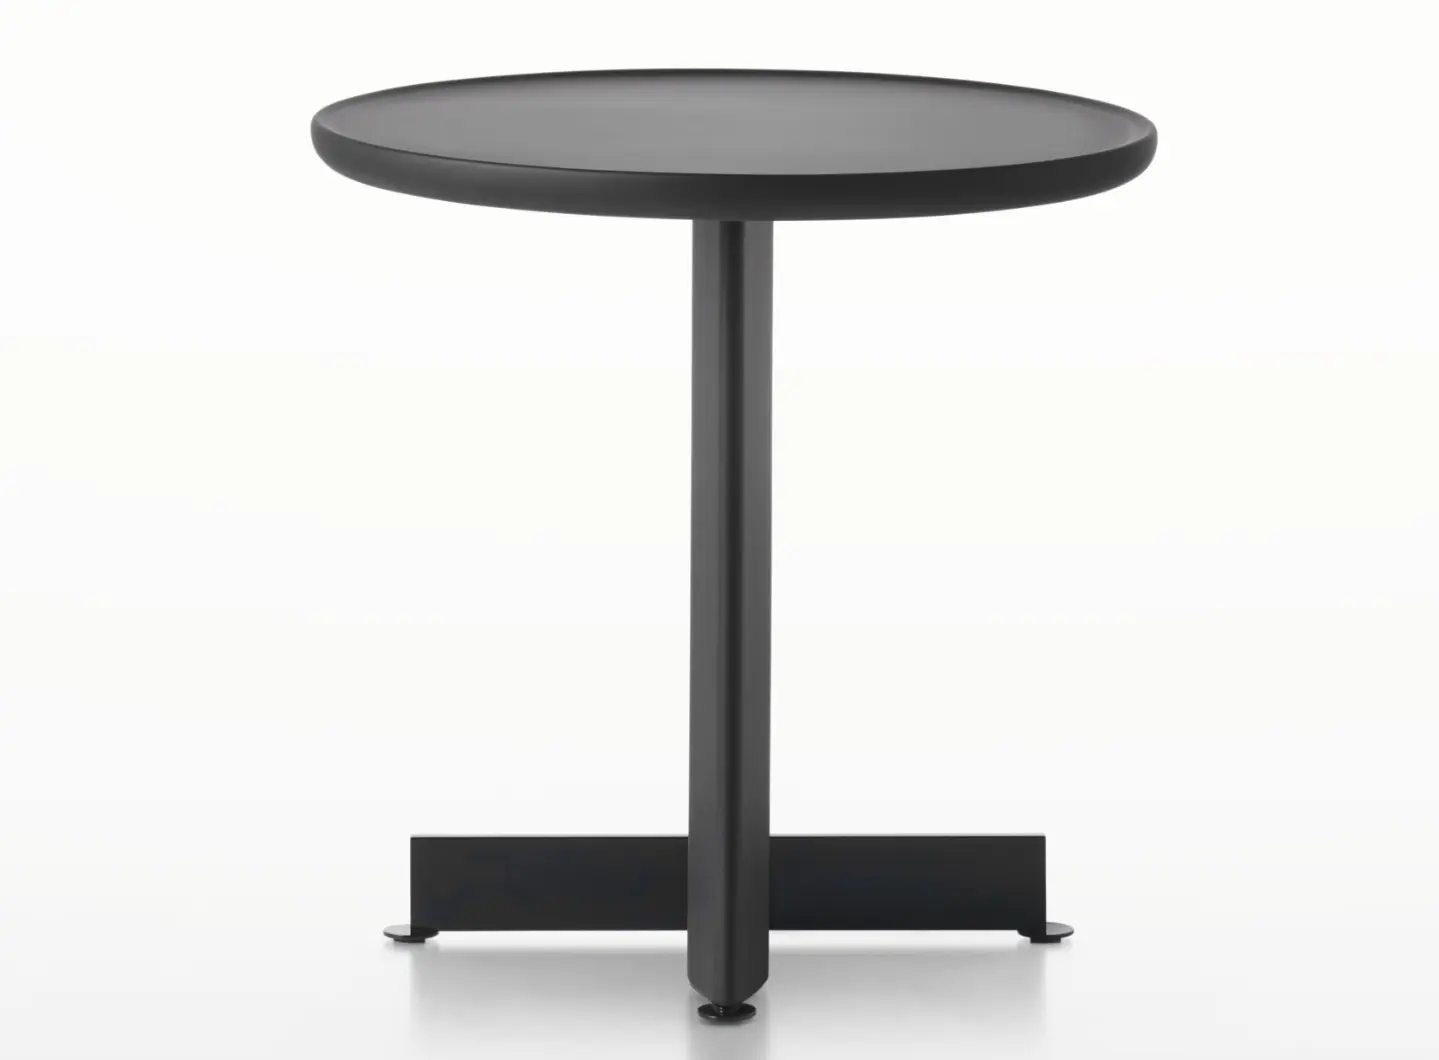 Savoy low table ø44, designed by Patrick Norguet